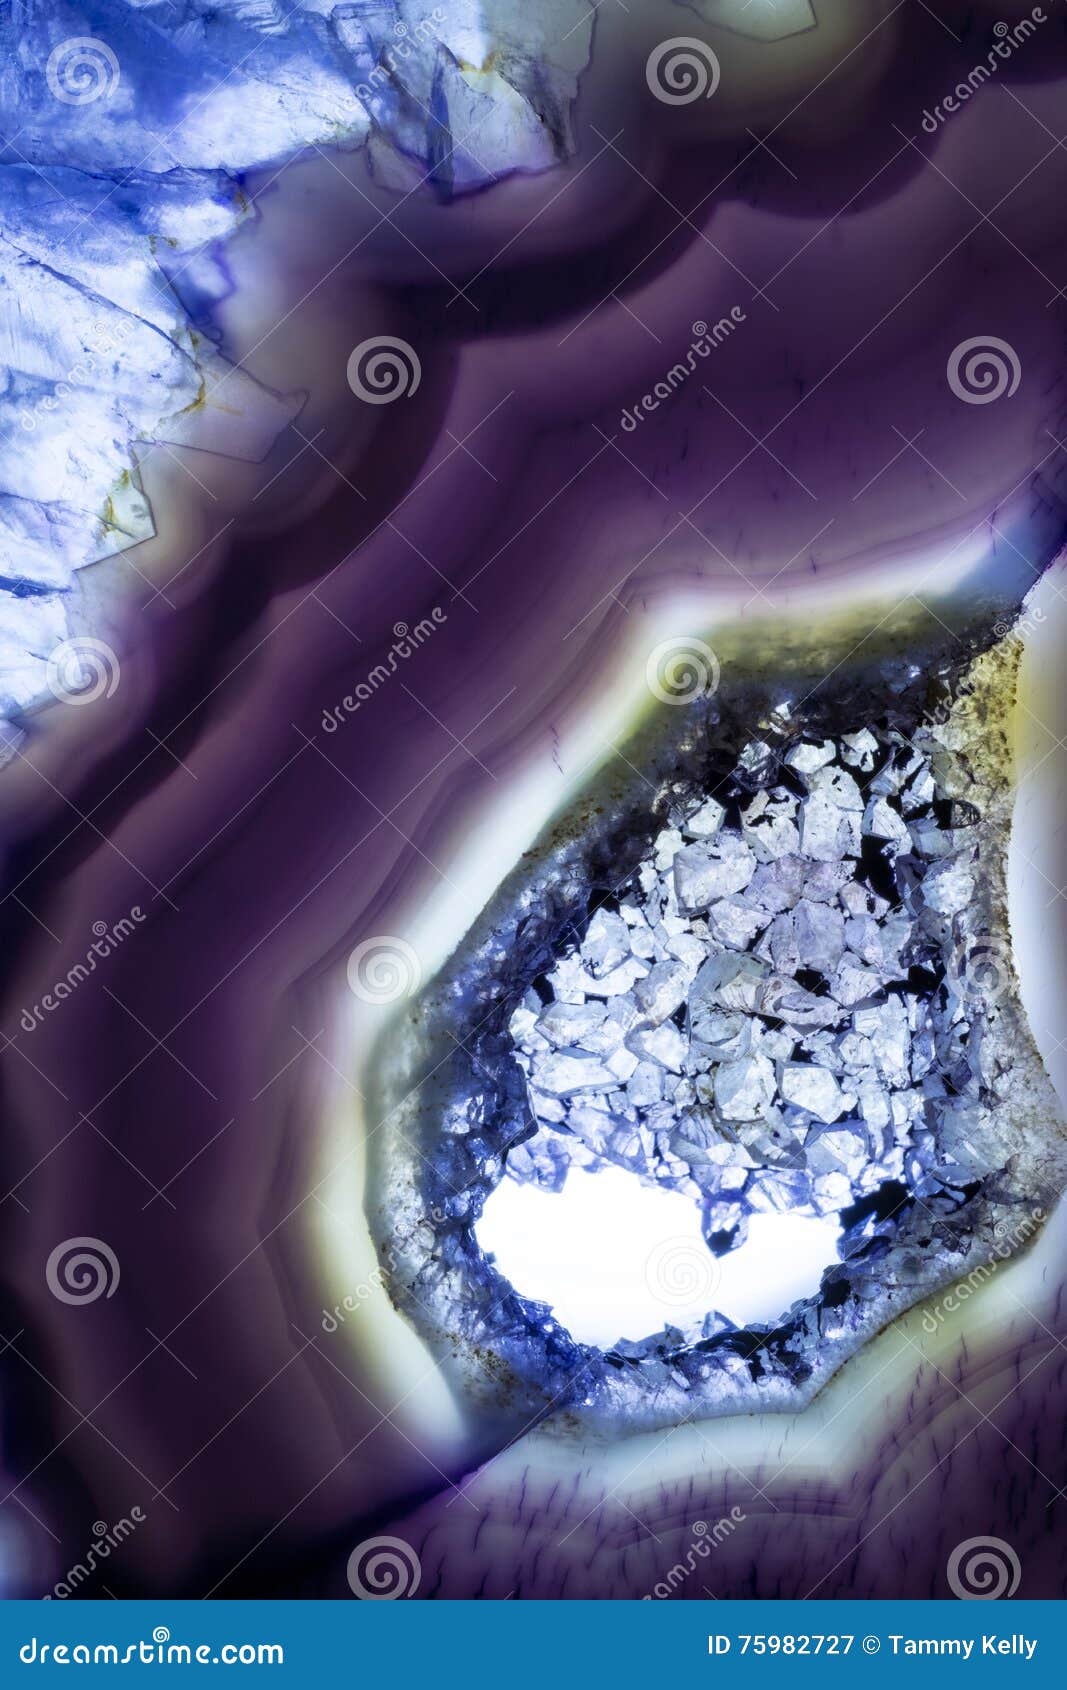 macro photo of a purple agate rock slice.